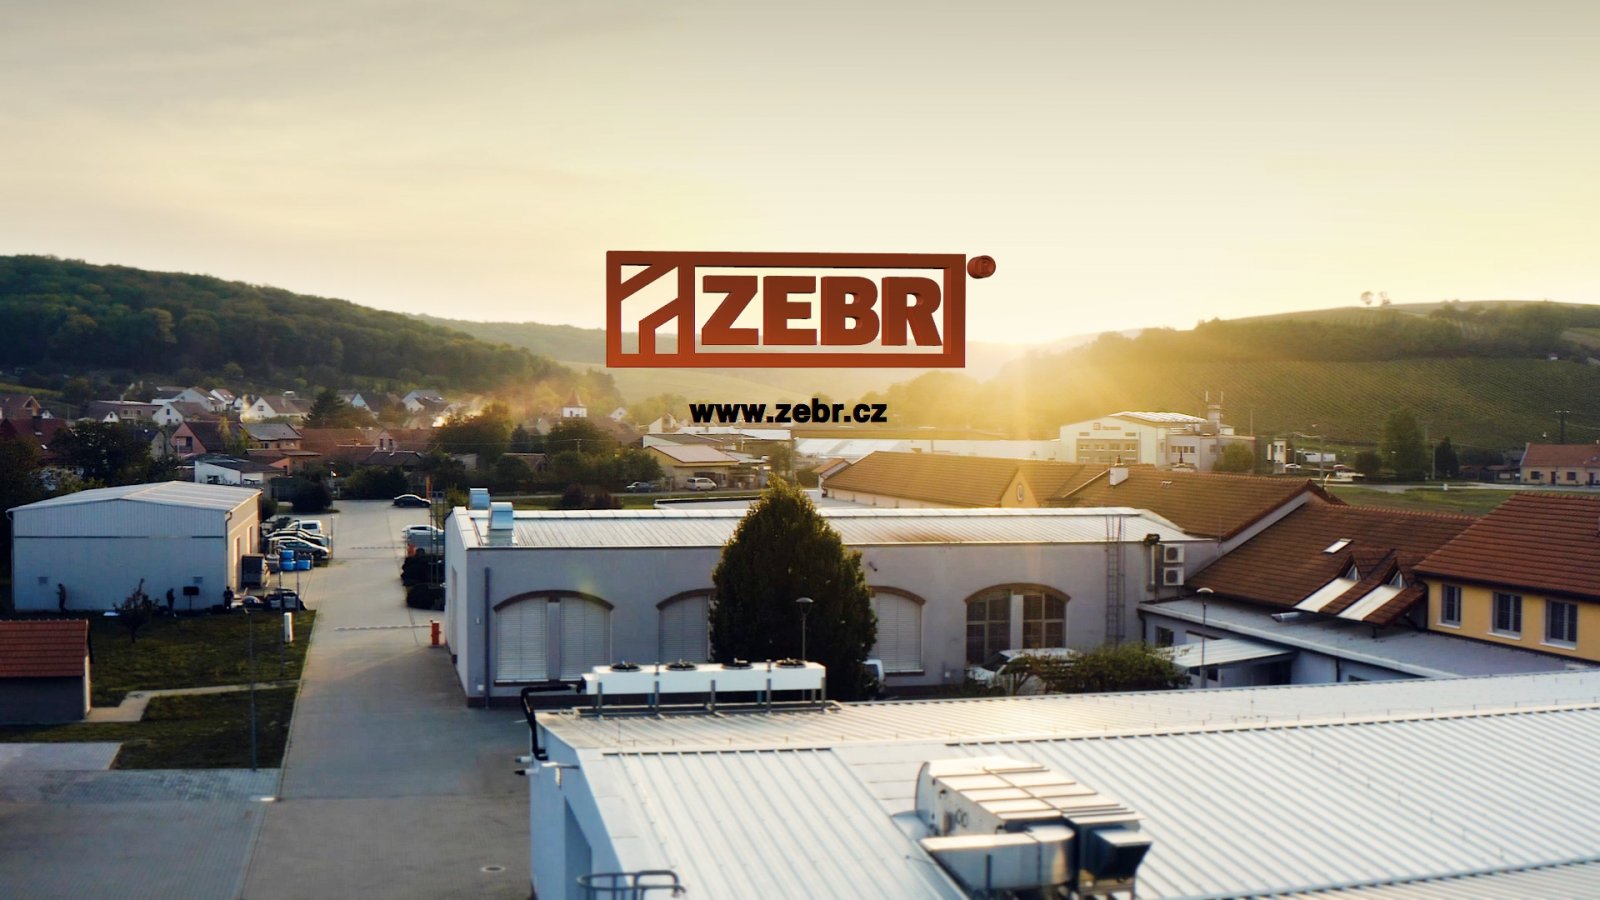 ZEBR company video